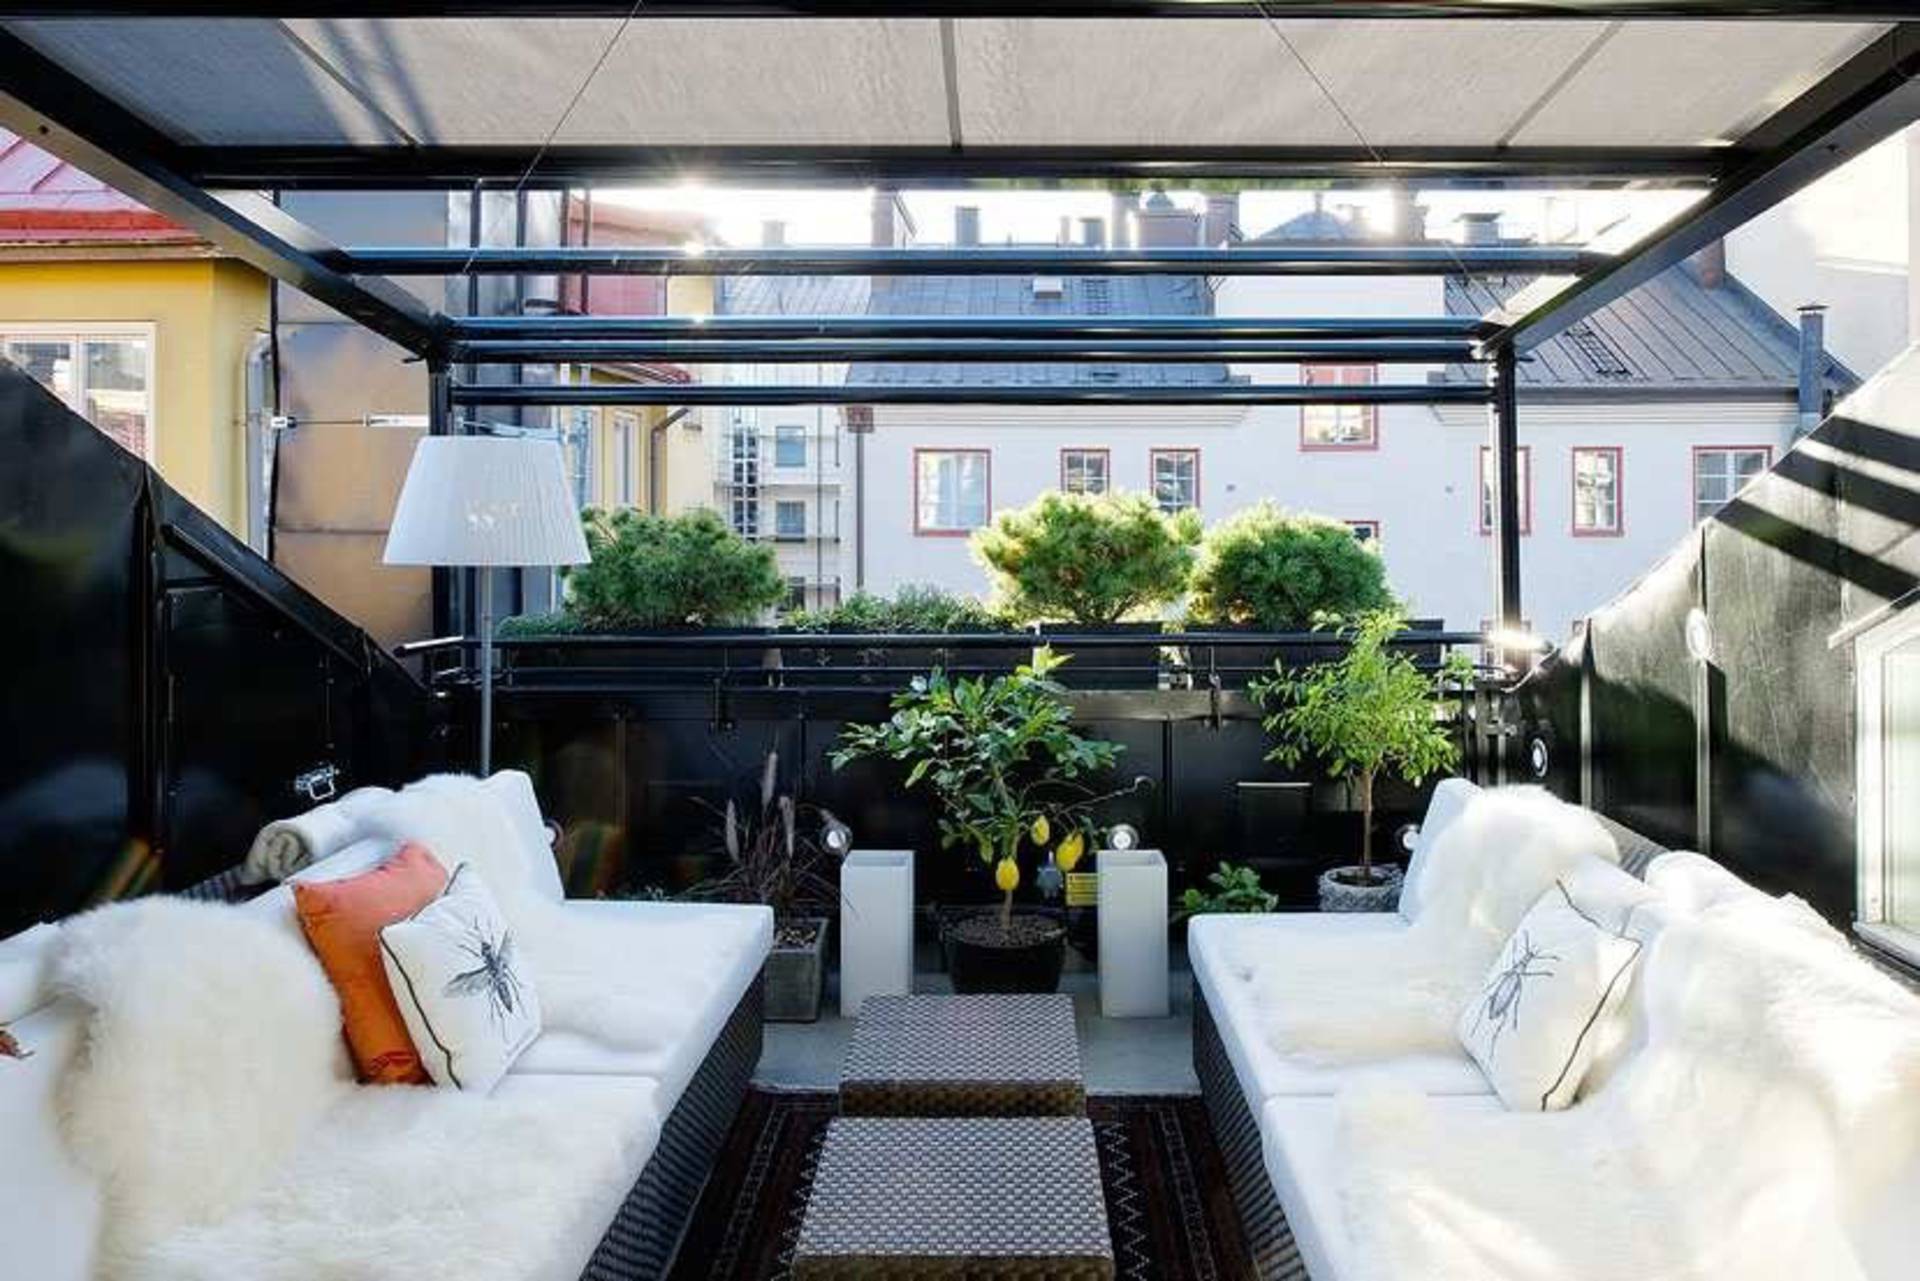 Luxury Duplex Penthouse Apartment Interior In Stockholm Sweden